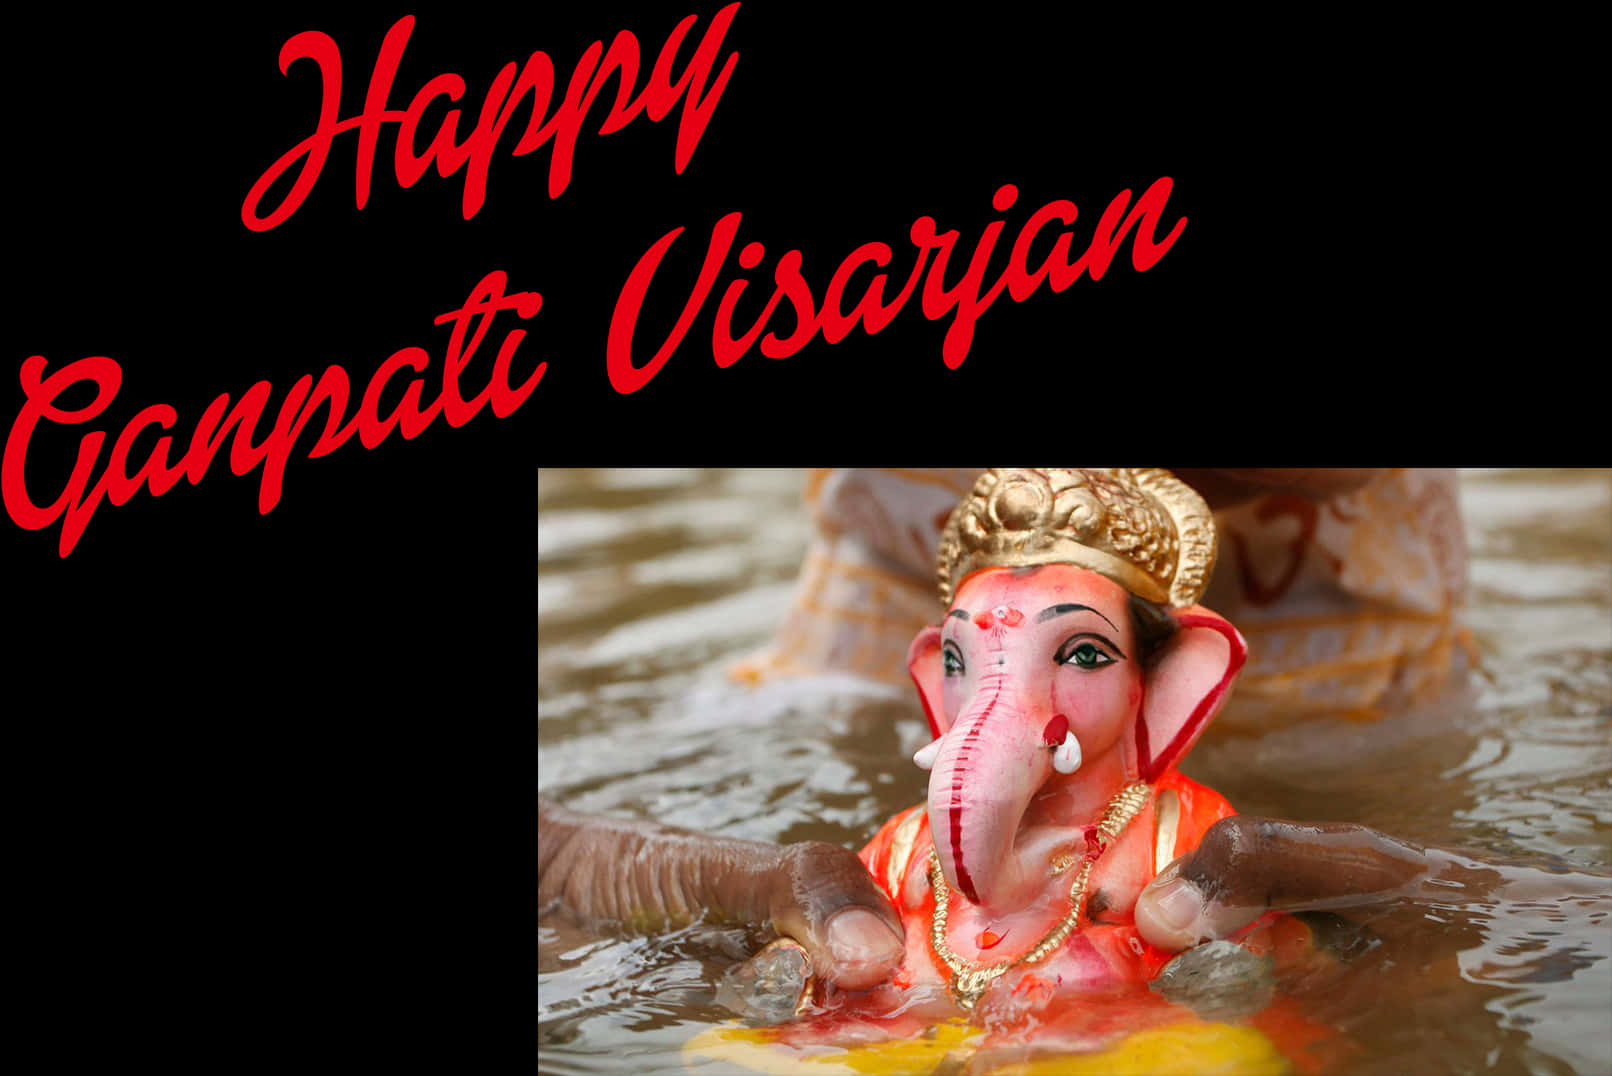 Ganpati Visarjan Celebration PNG image